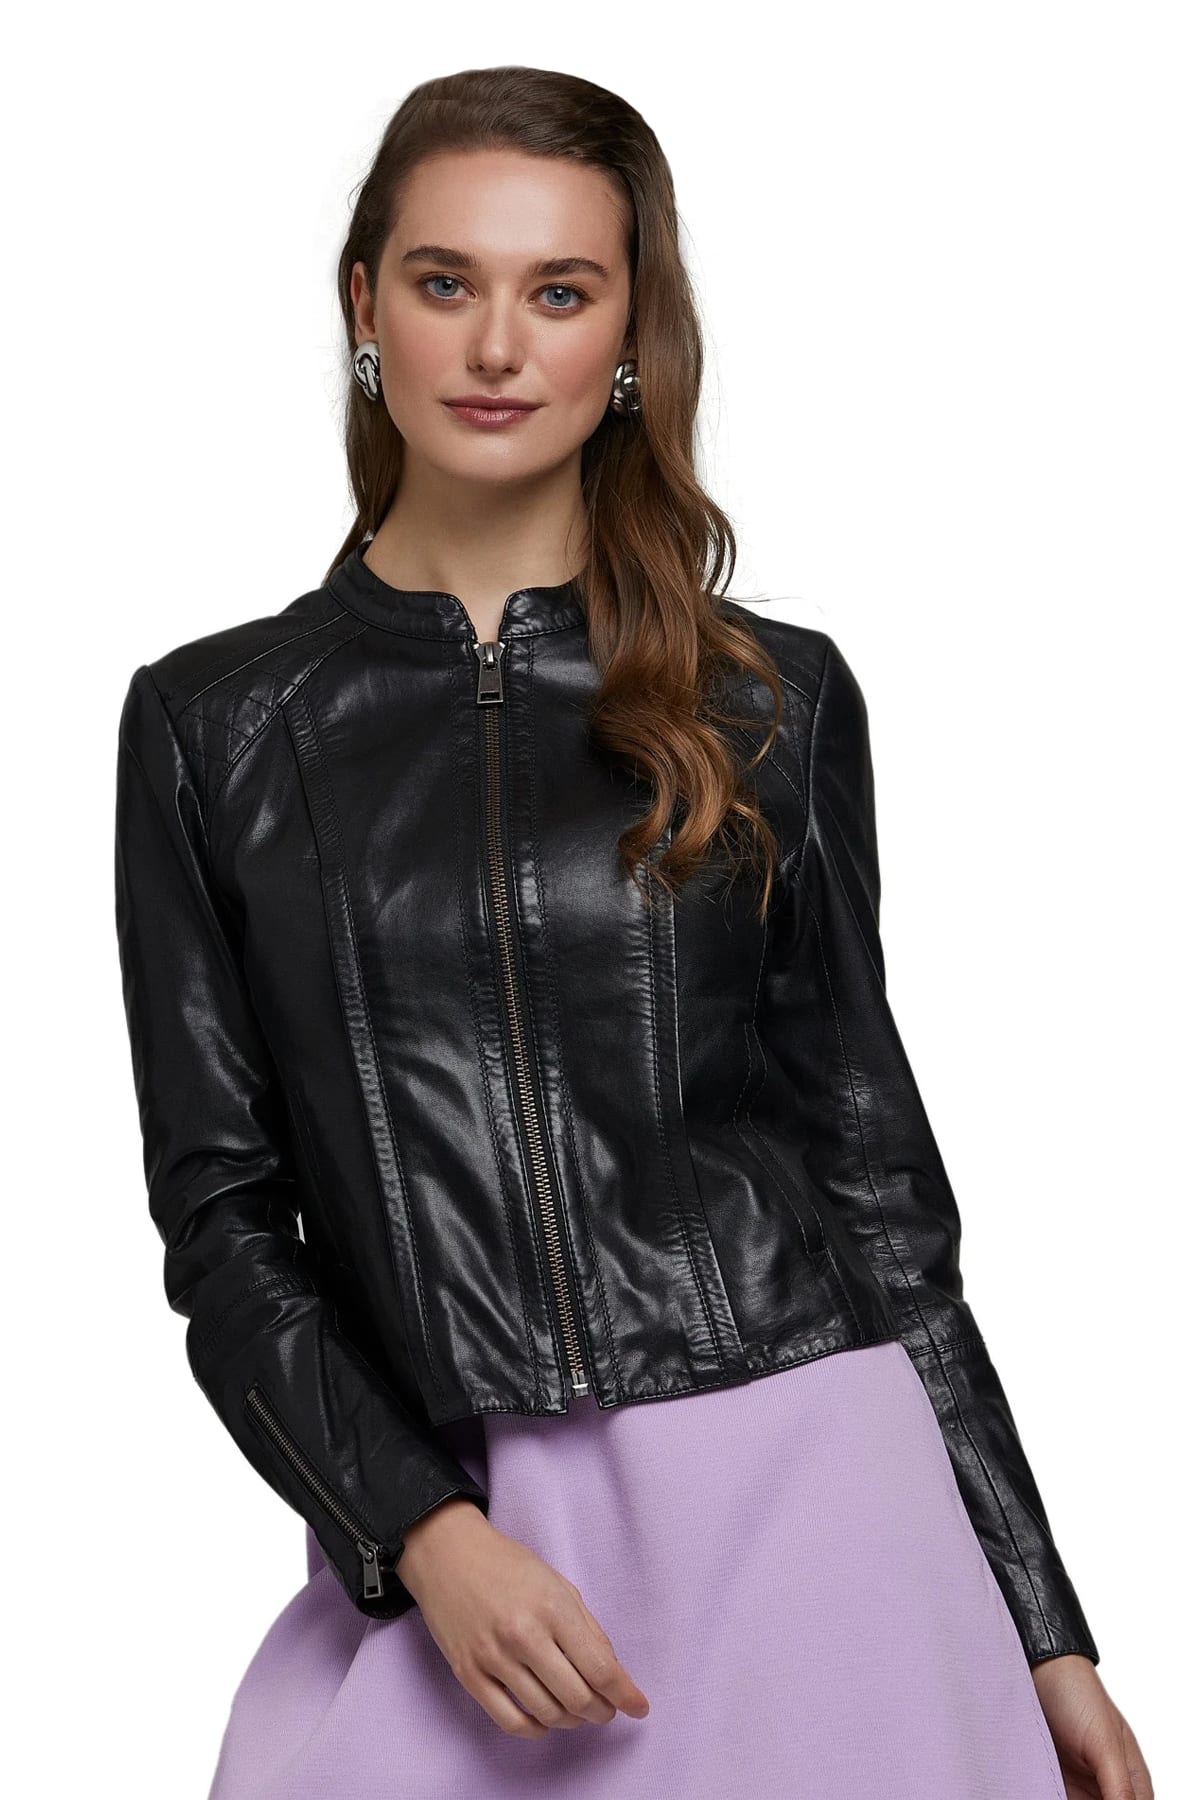 Karlie Kloss Women's 100 % Real Black Leather Biker Jacket